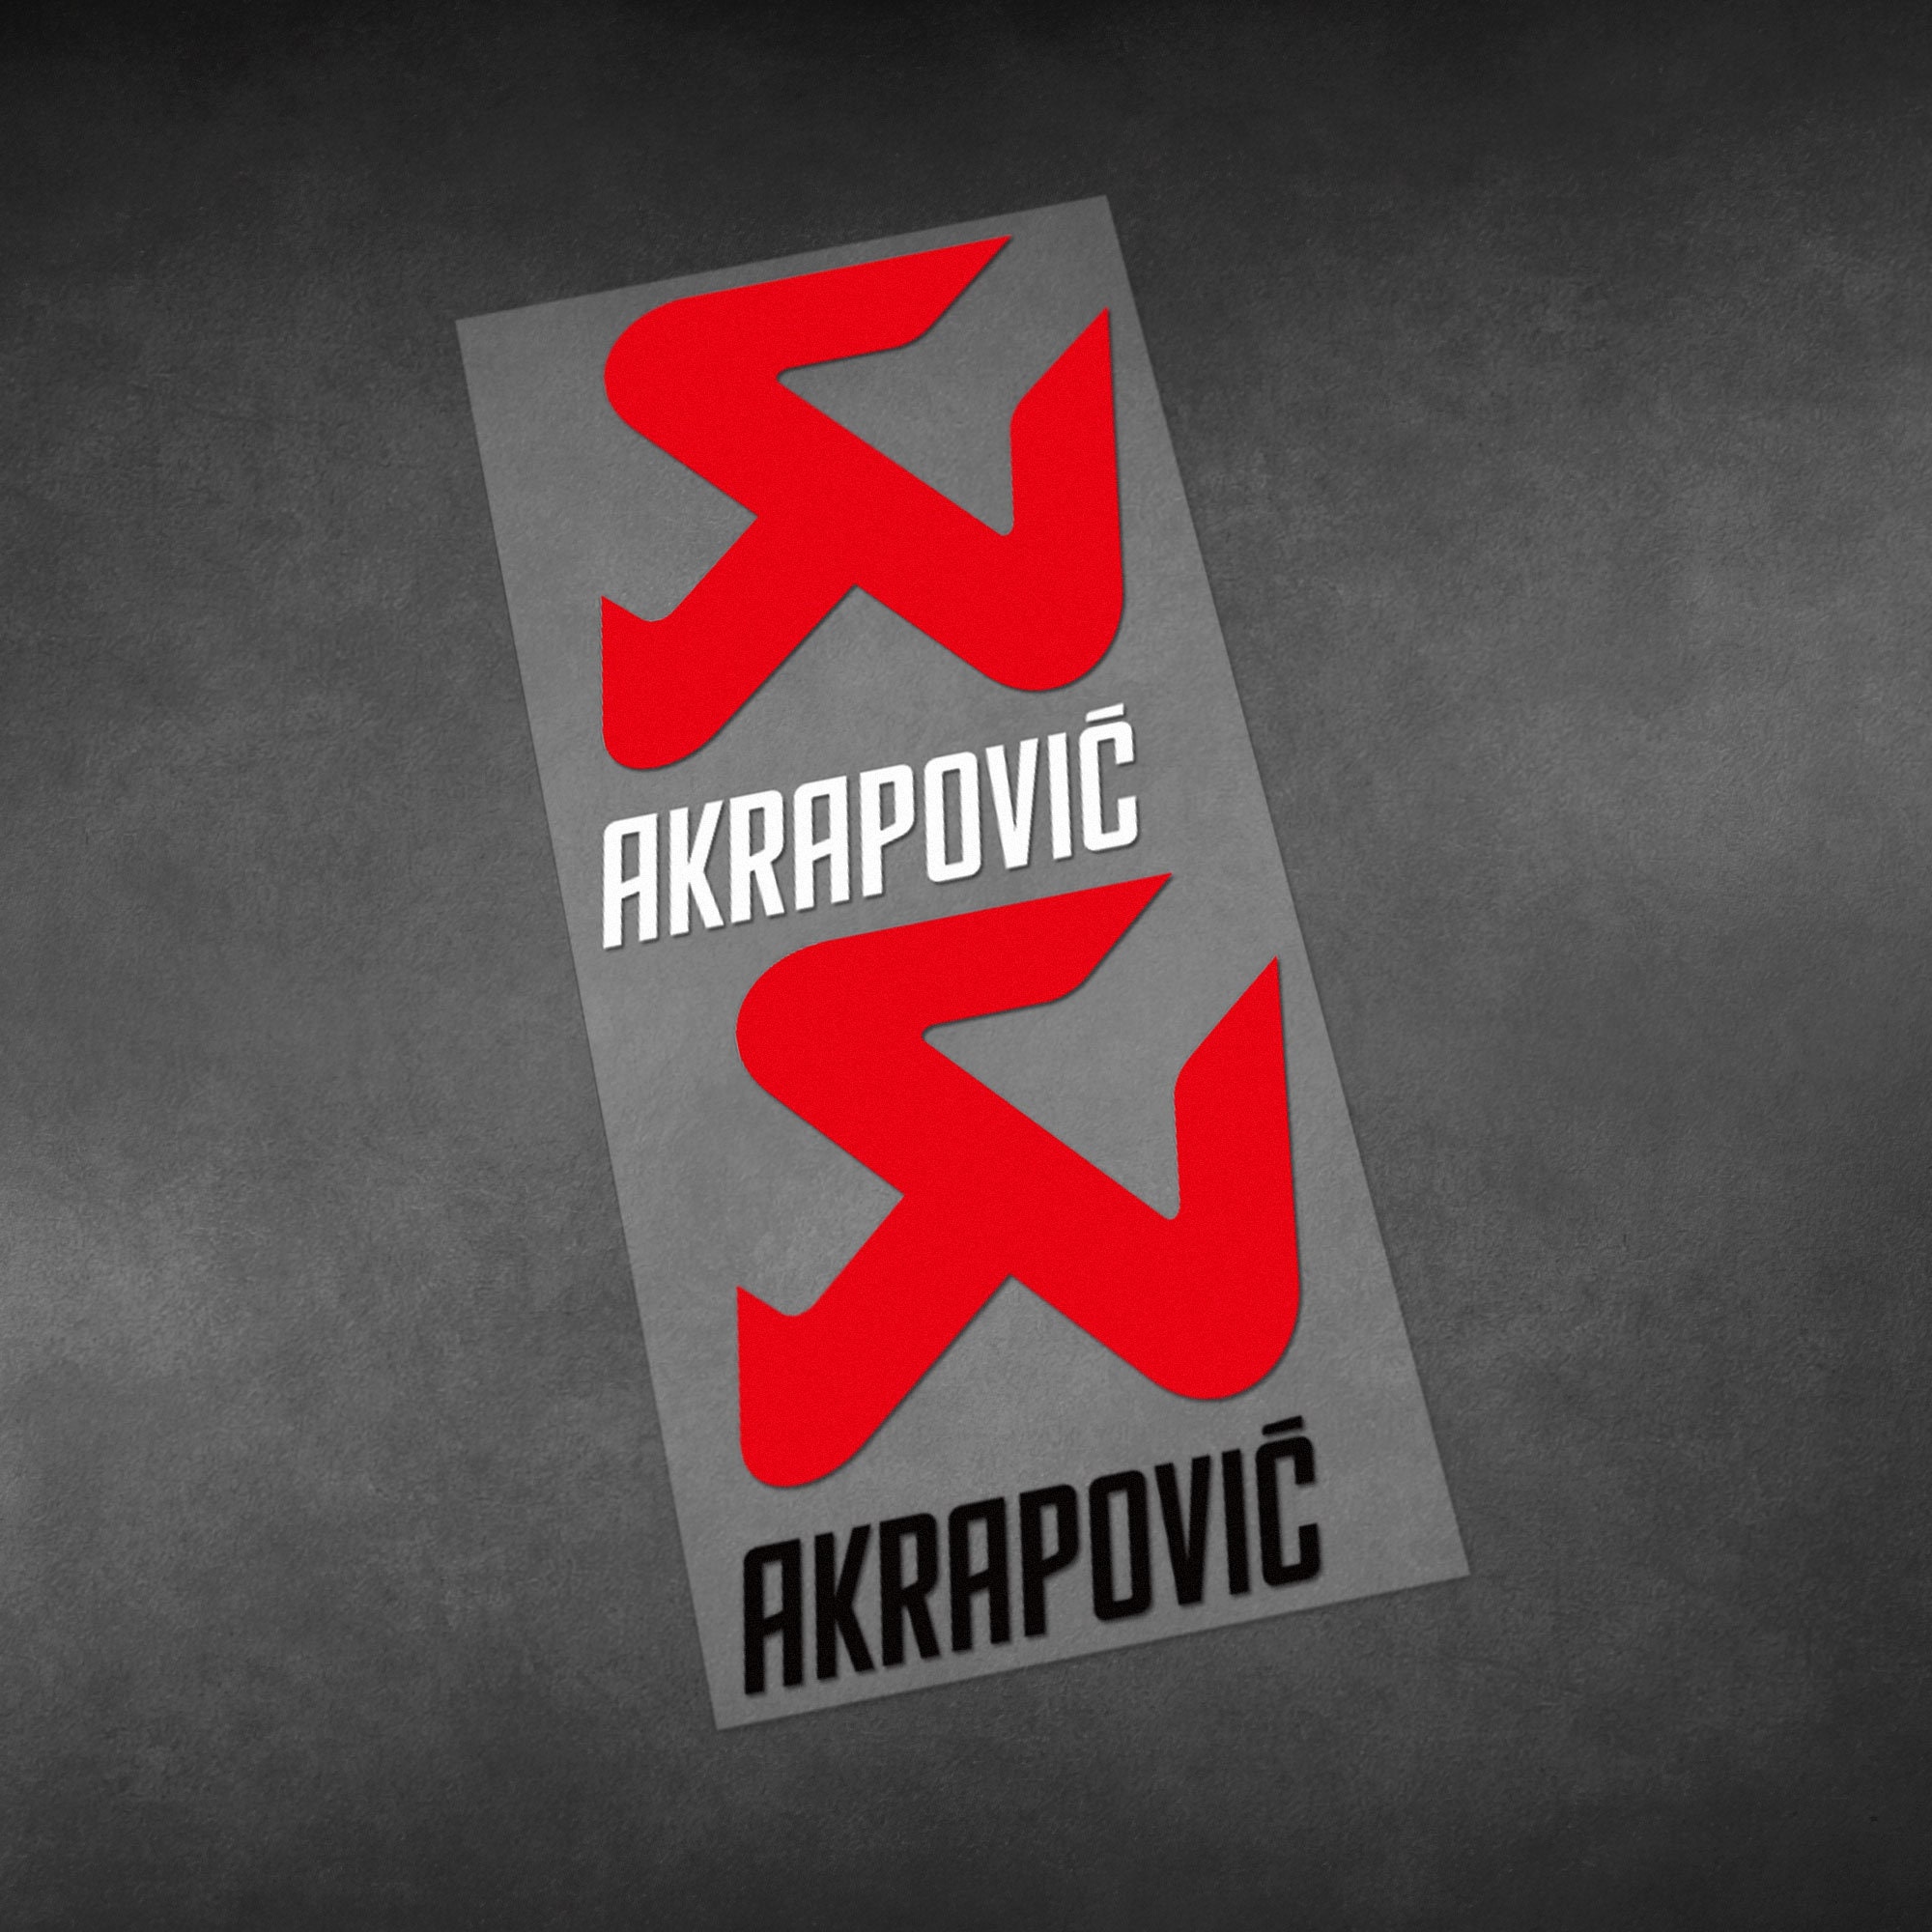 Akrapovic Style 2 Decal Sticker